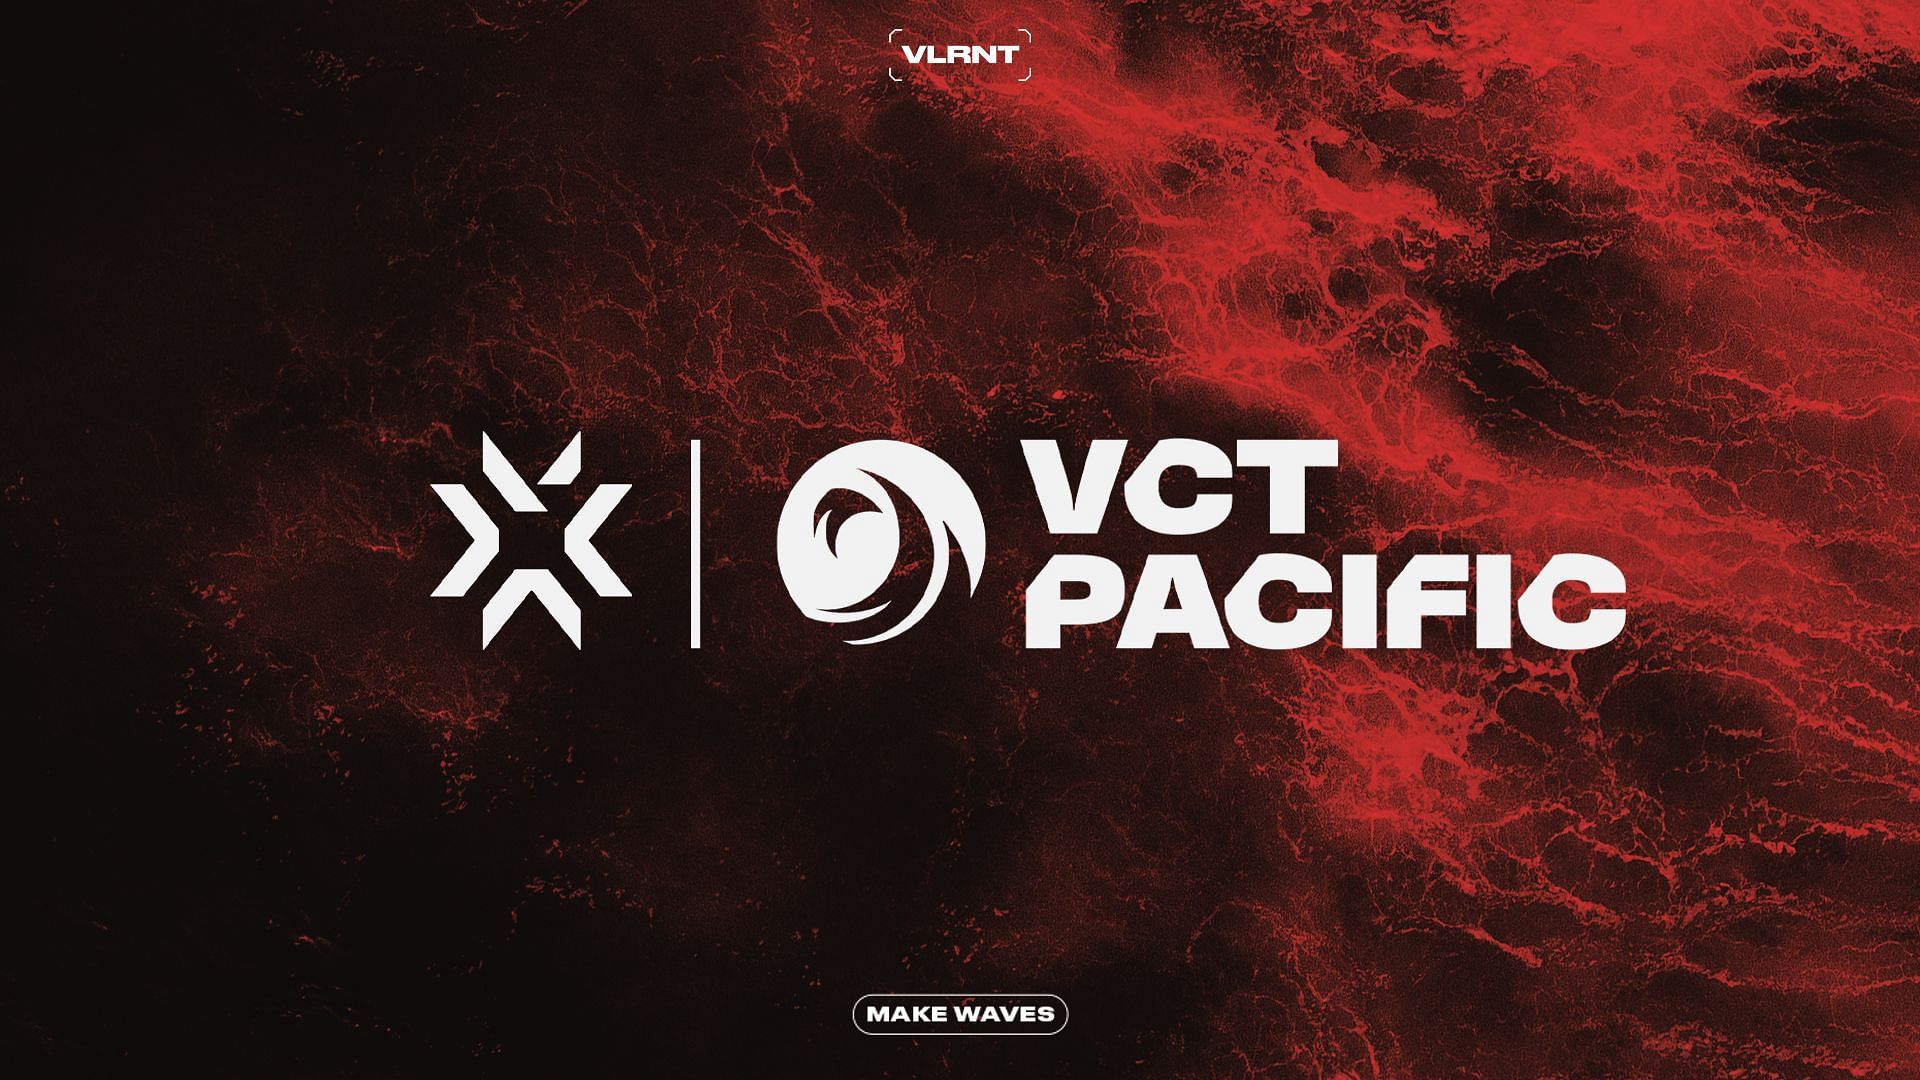 VCT Pacific League tickets (Image via Riot Games)